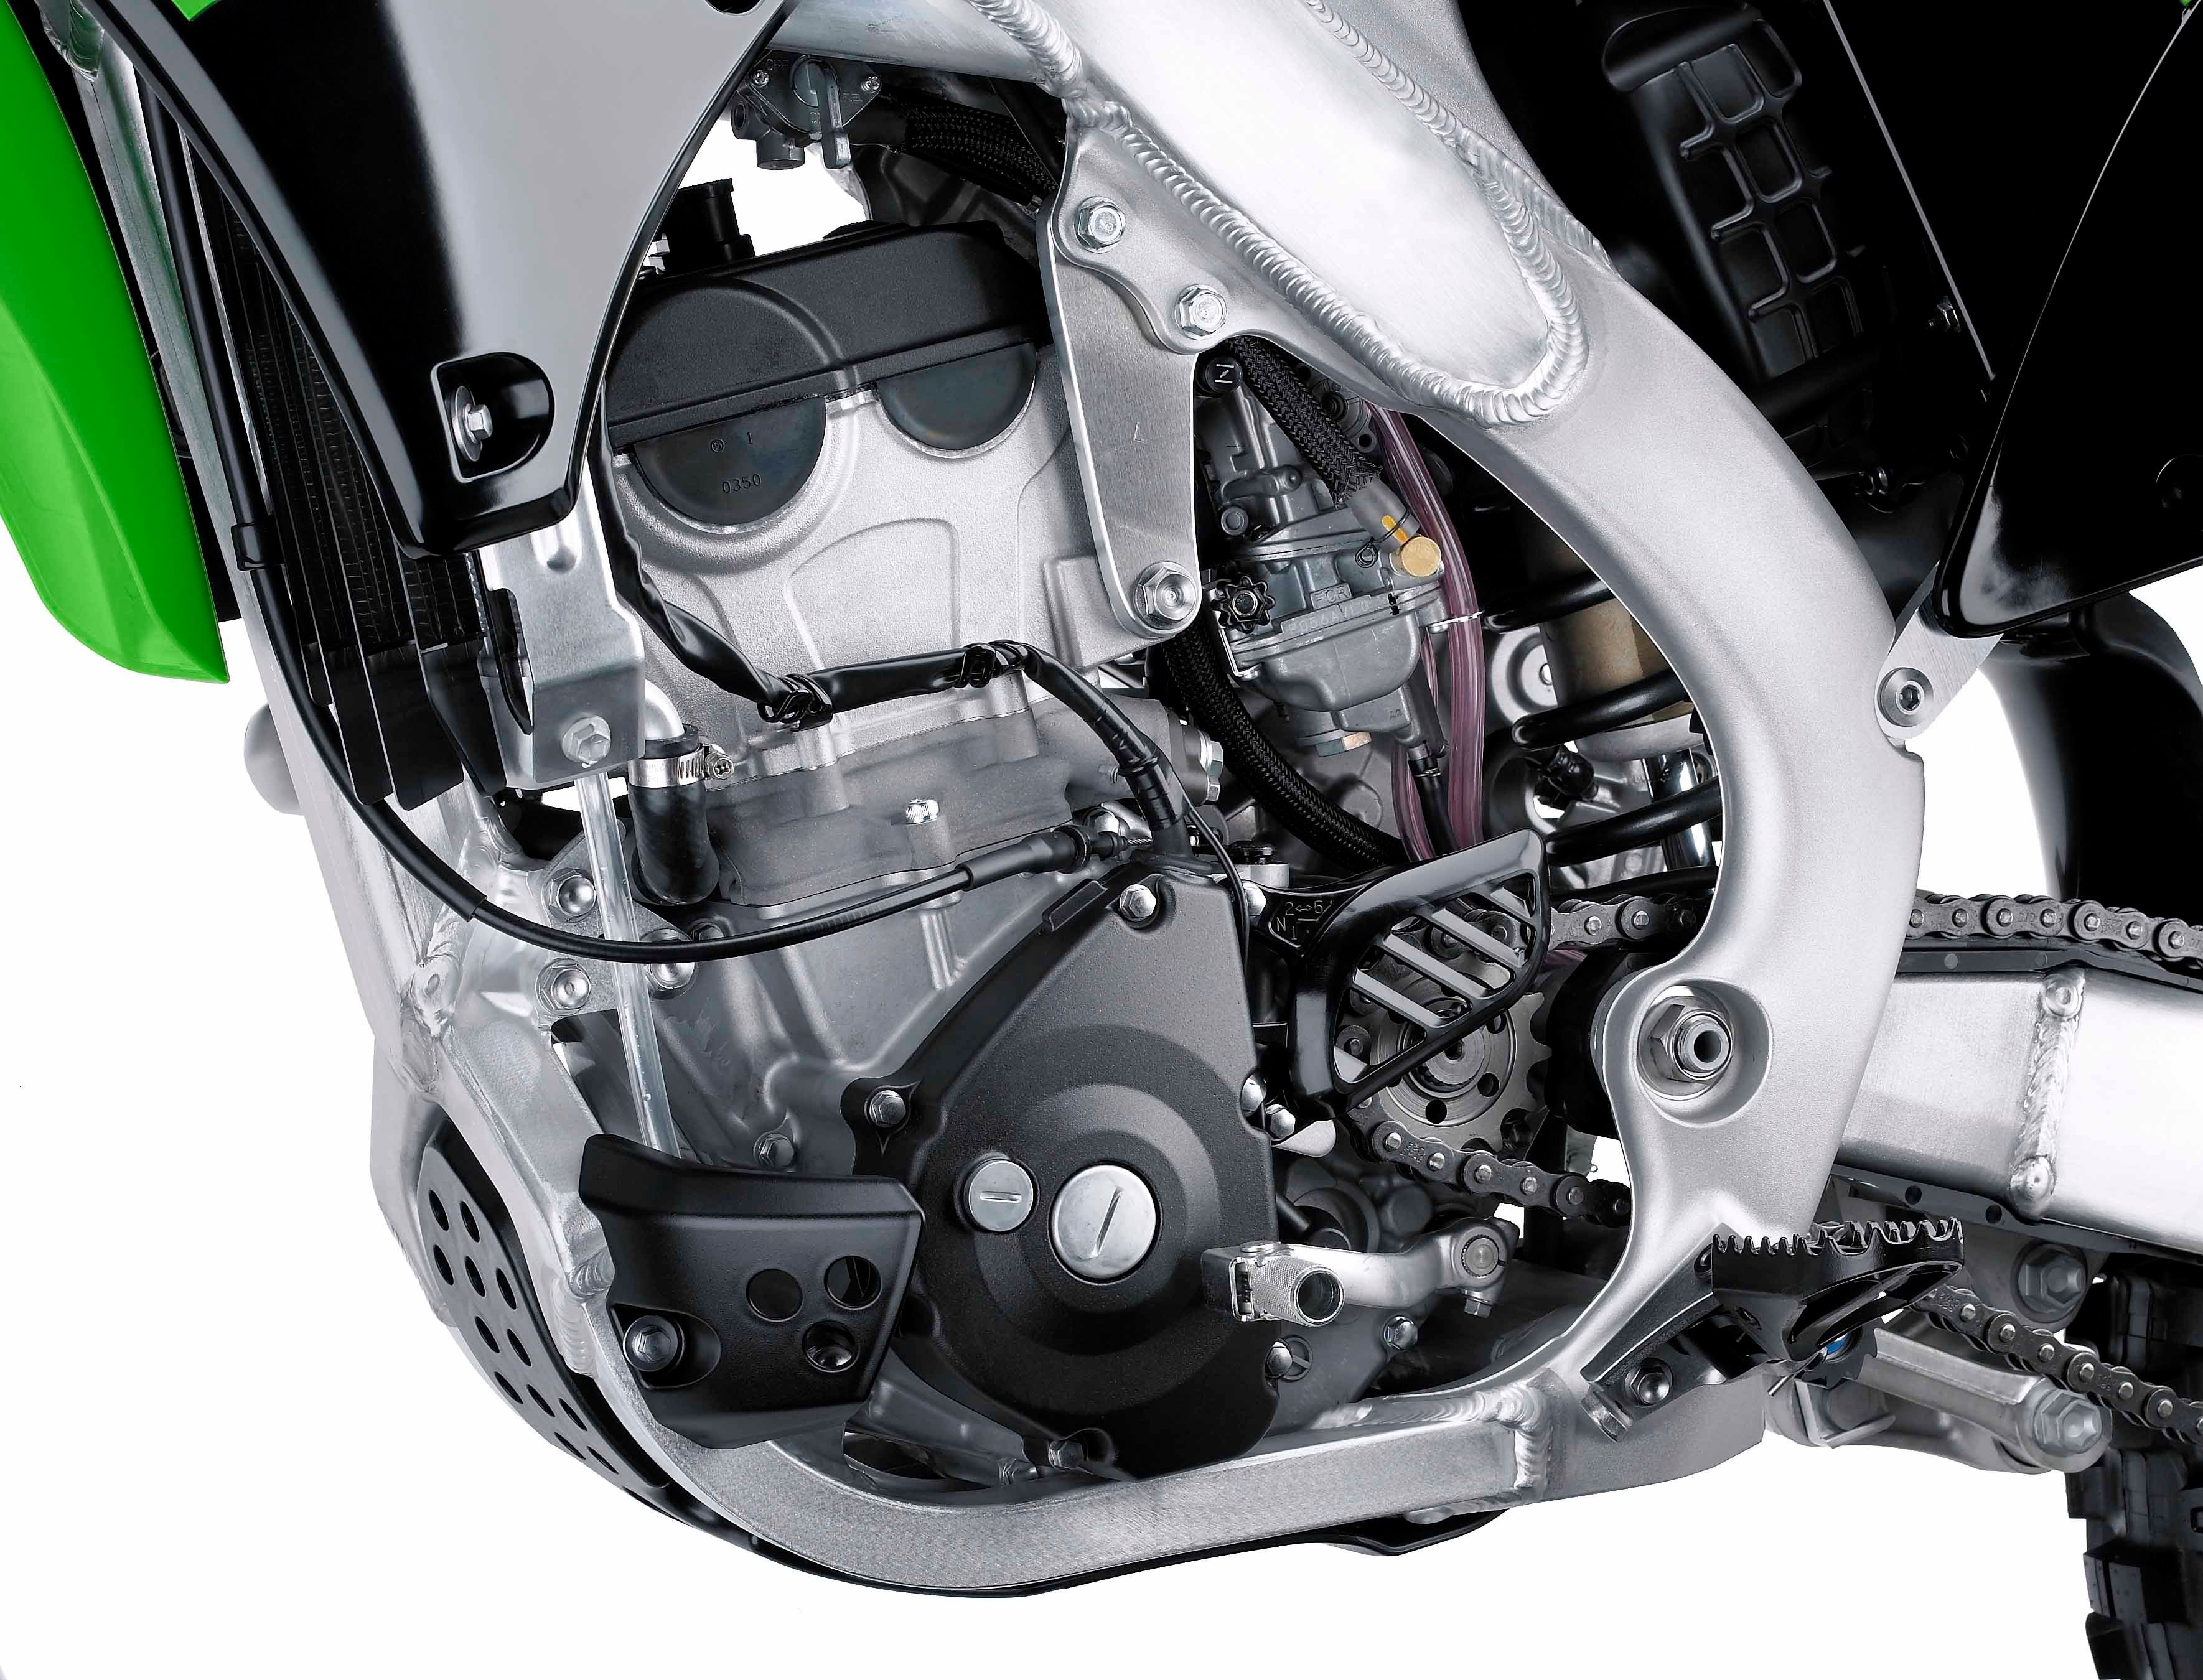  2009 Kawasaki KX250F Engine